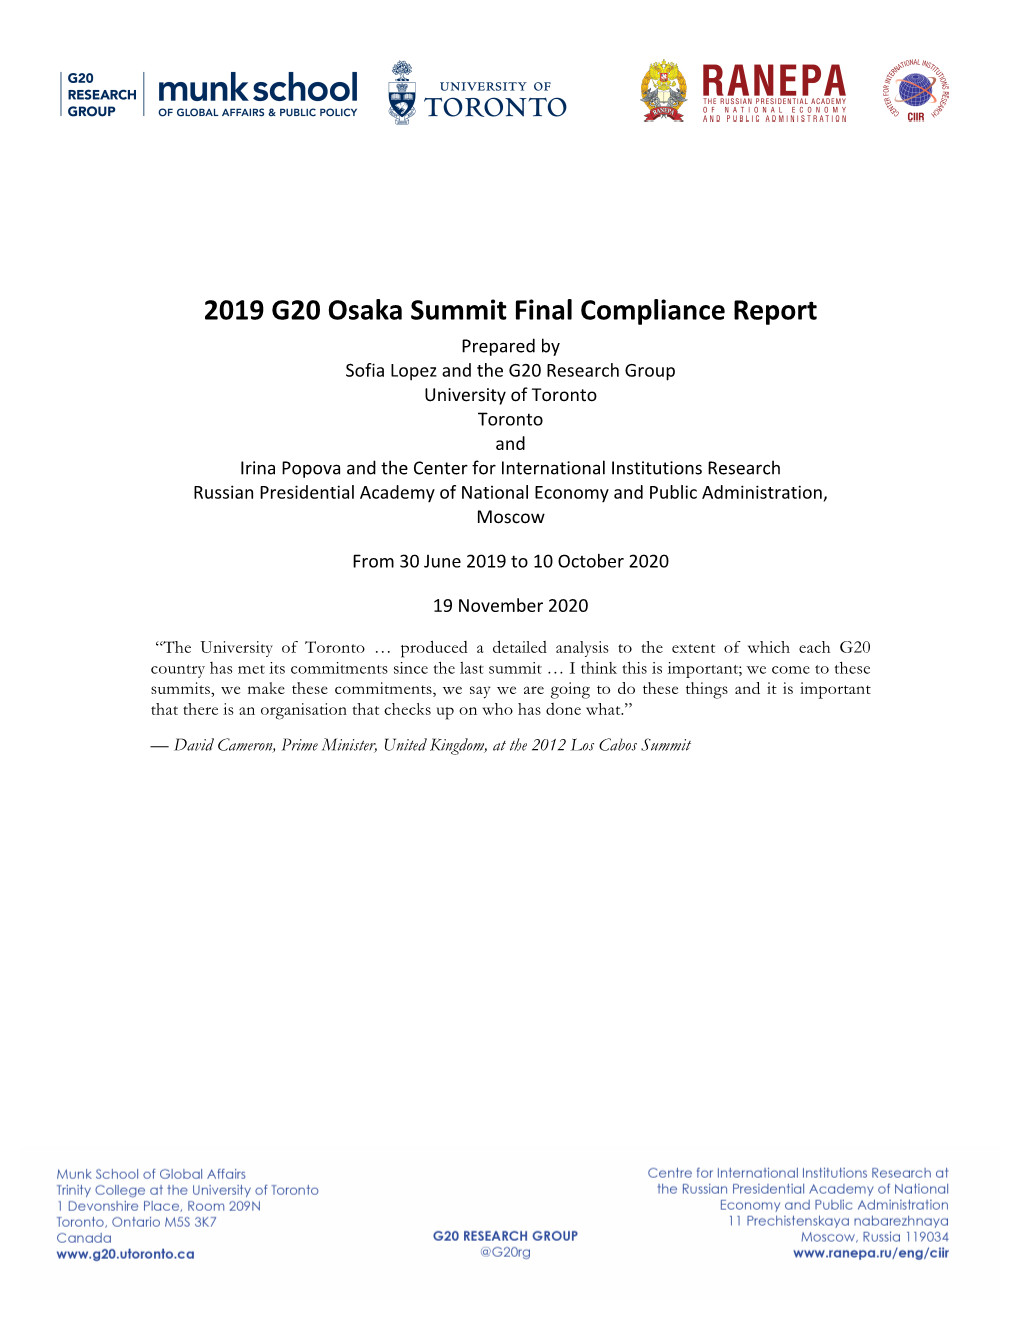 Digital Economy: 2019 G20 Osaka Summit Final Compliance Report